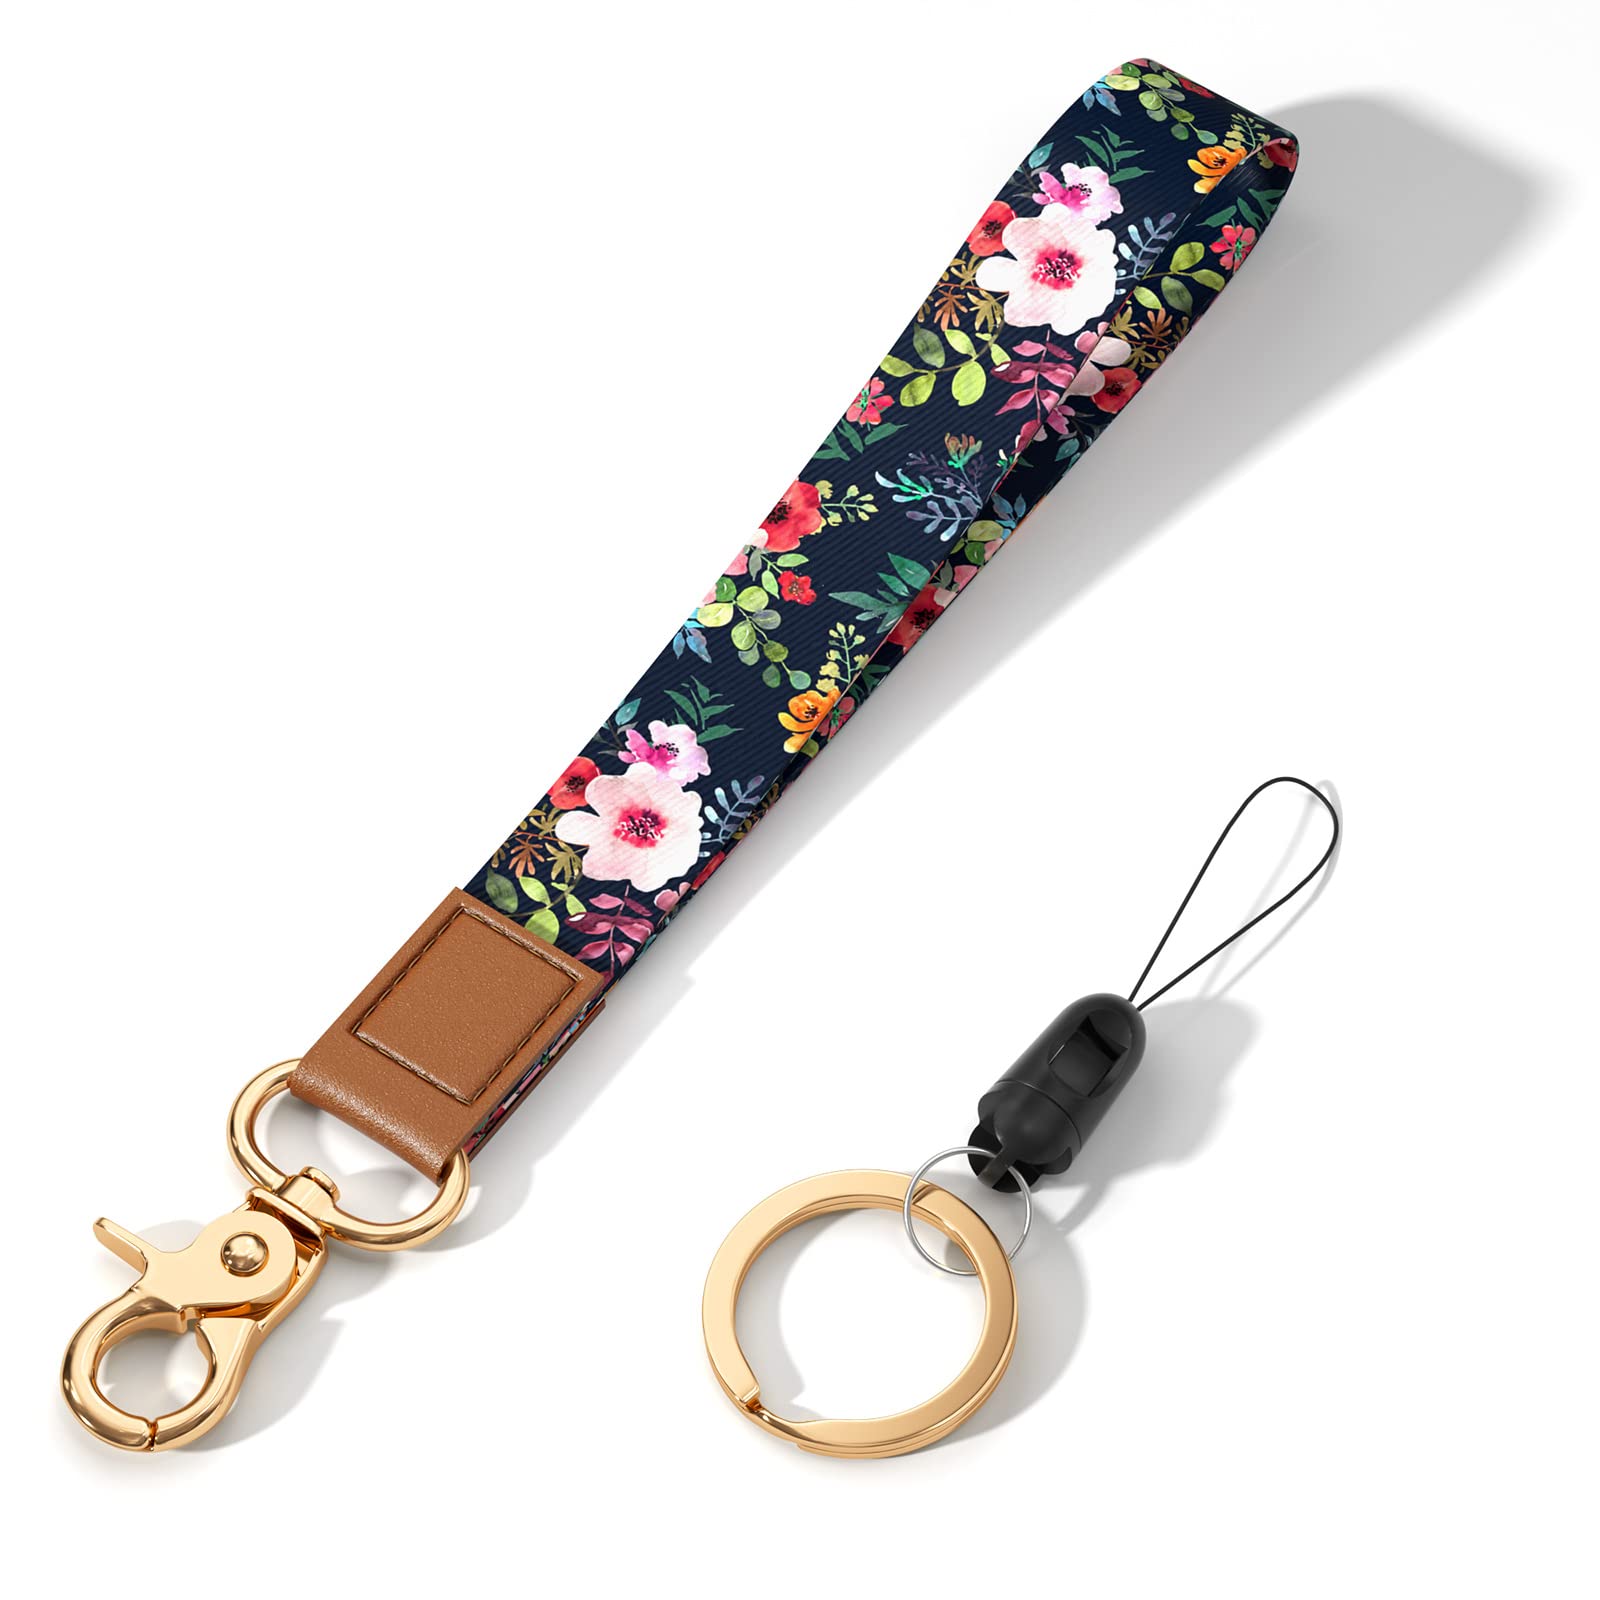 Hsxnam Wrist Lanyard Key Chain, Cute Wristlet Strap Keychain Holder For Women Men Keys Id Badges Phone Airpods, Black Flowera